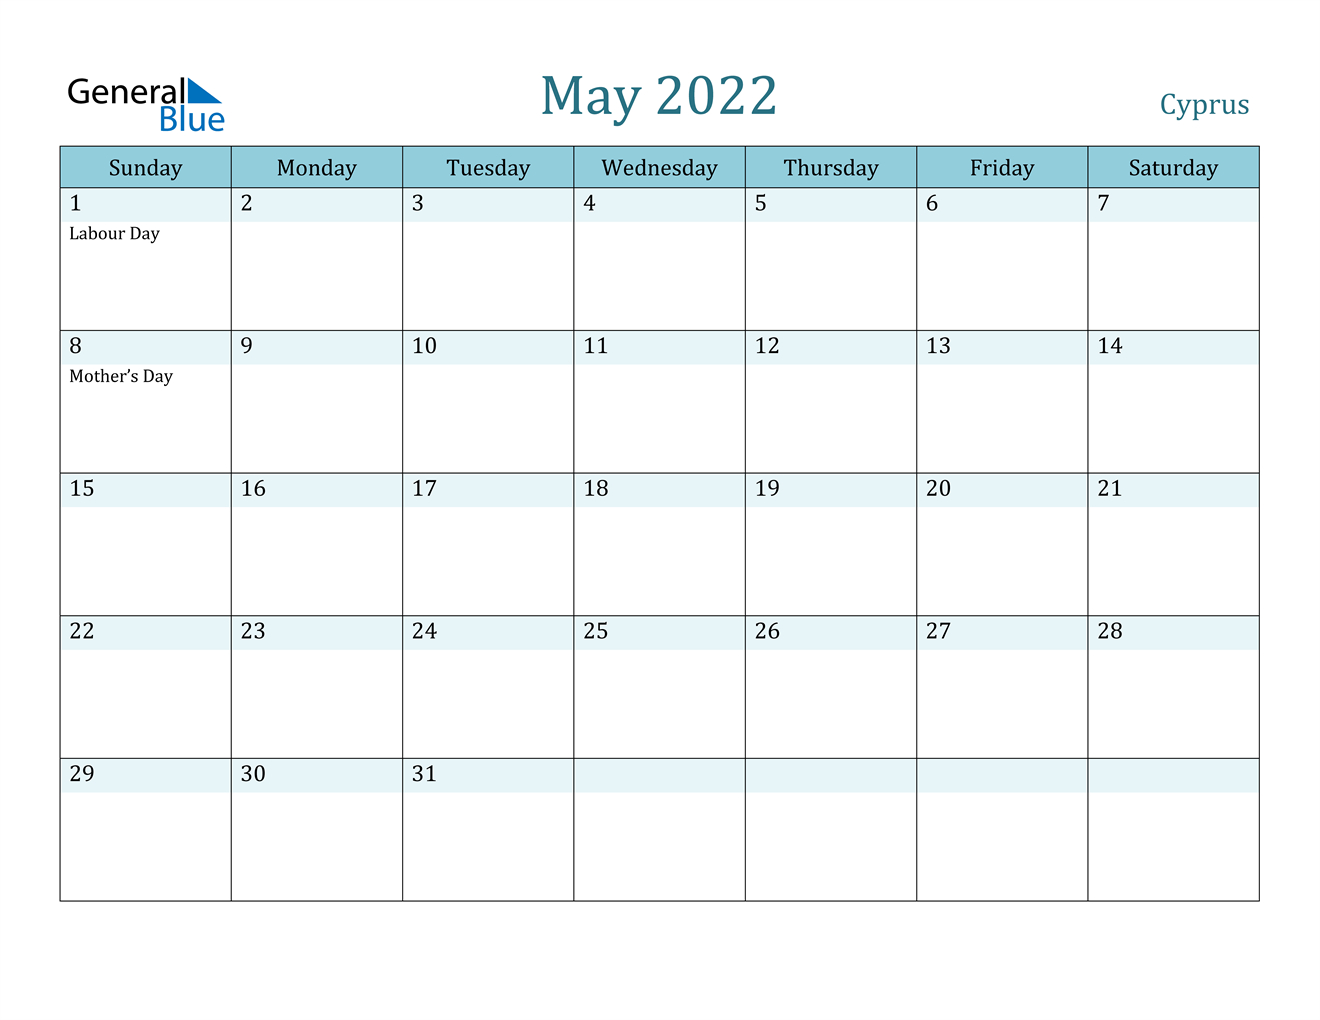 May 2022 Calendar - Cyprus